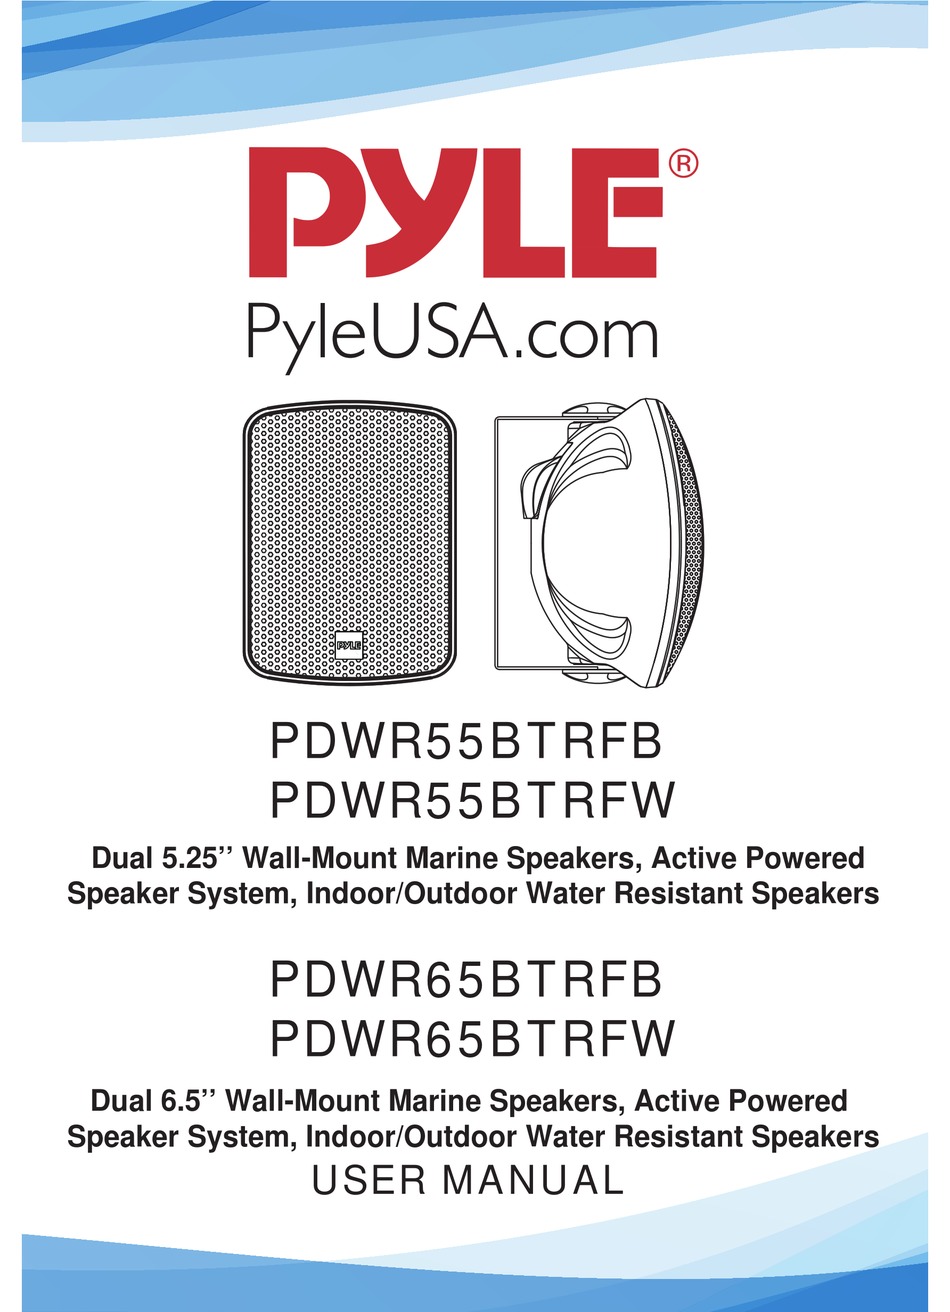 Pyle Pdwr55btrfb User Manual Pdf, Pyle Outdoor Speakers Manual